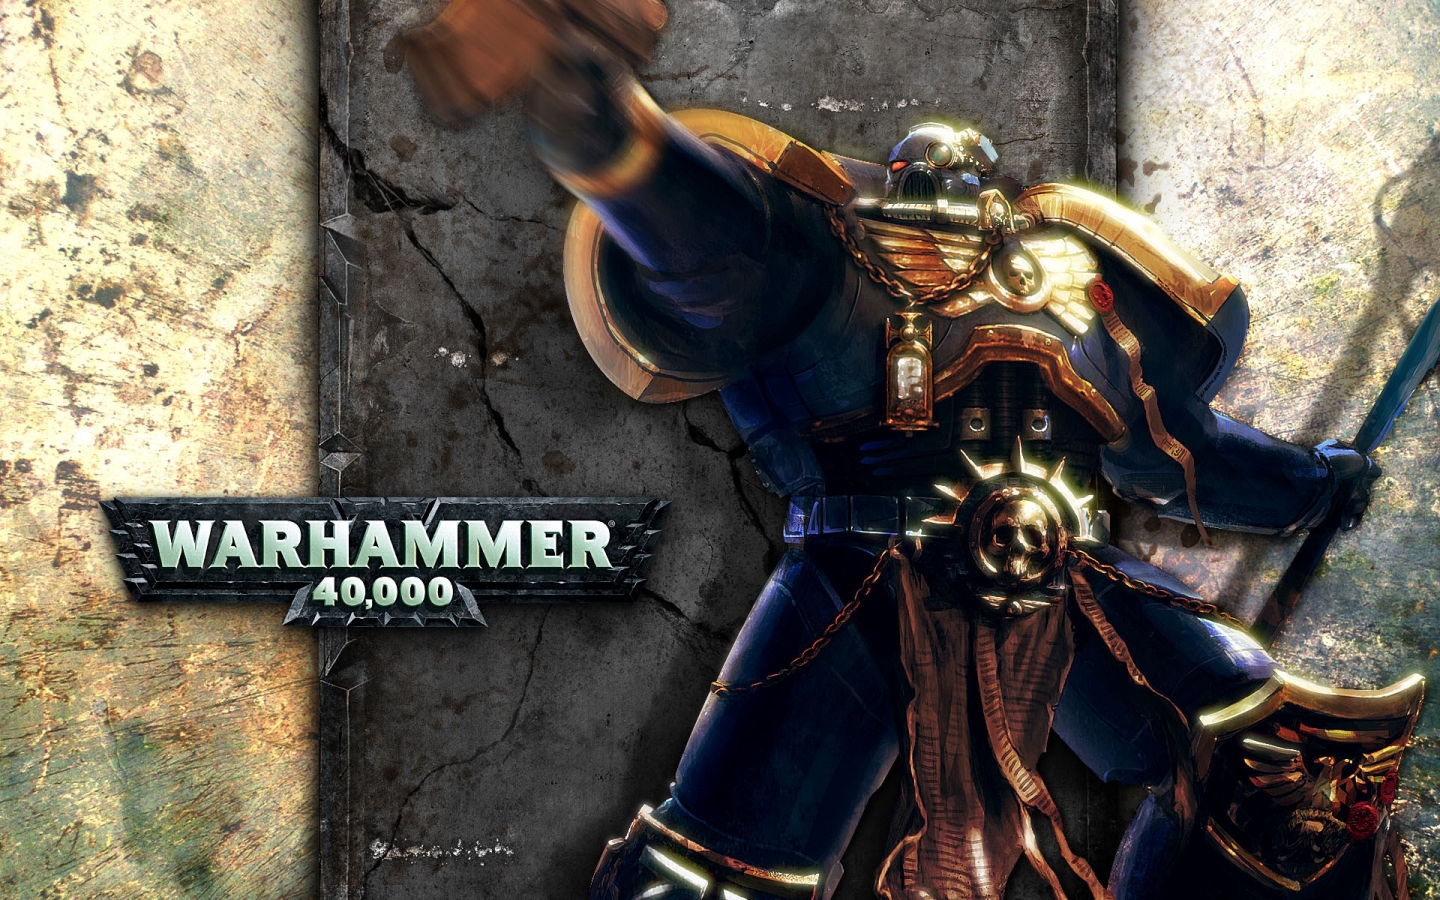 Warhammer 40k Poster for 1440 x 900 widescreen resolution